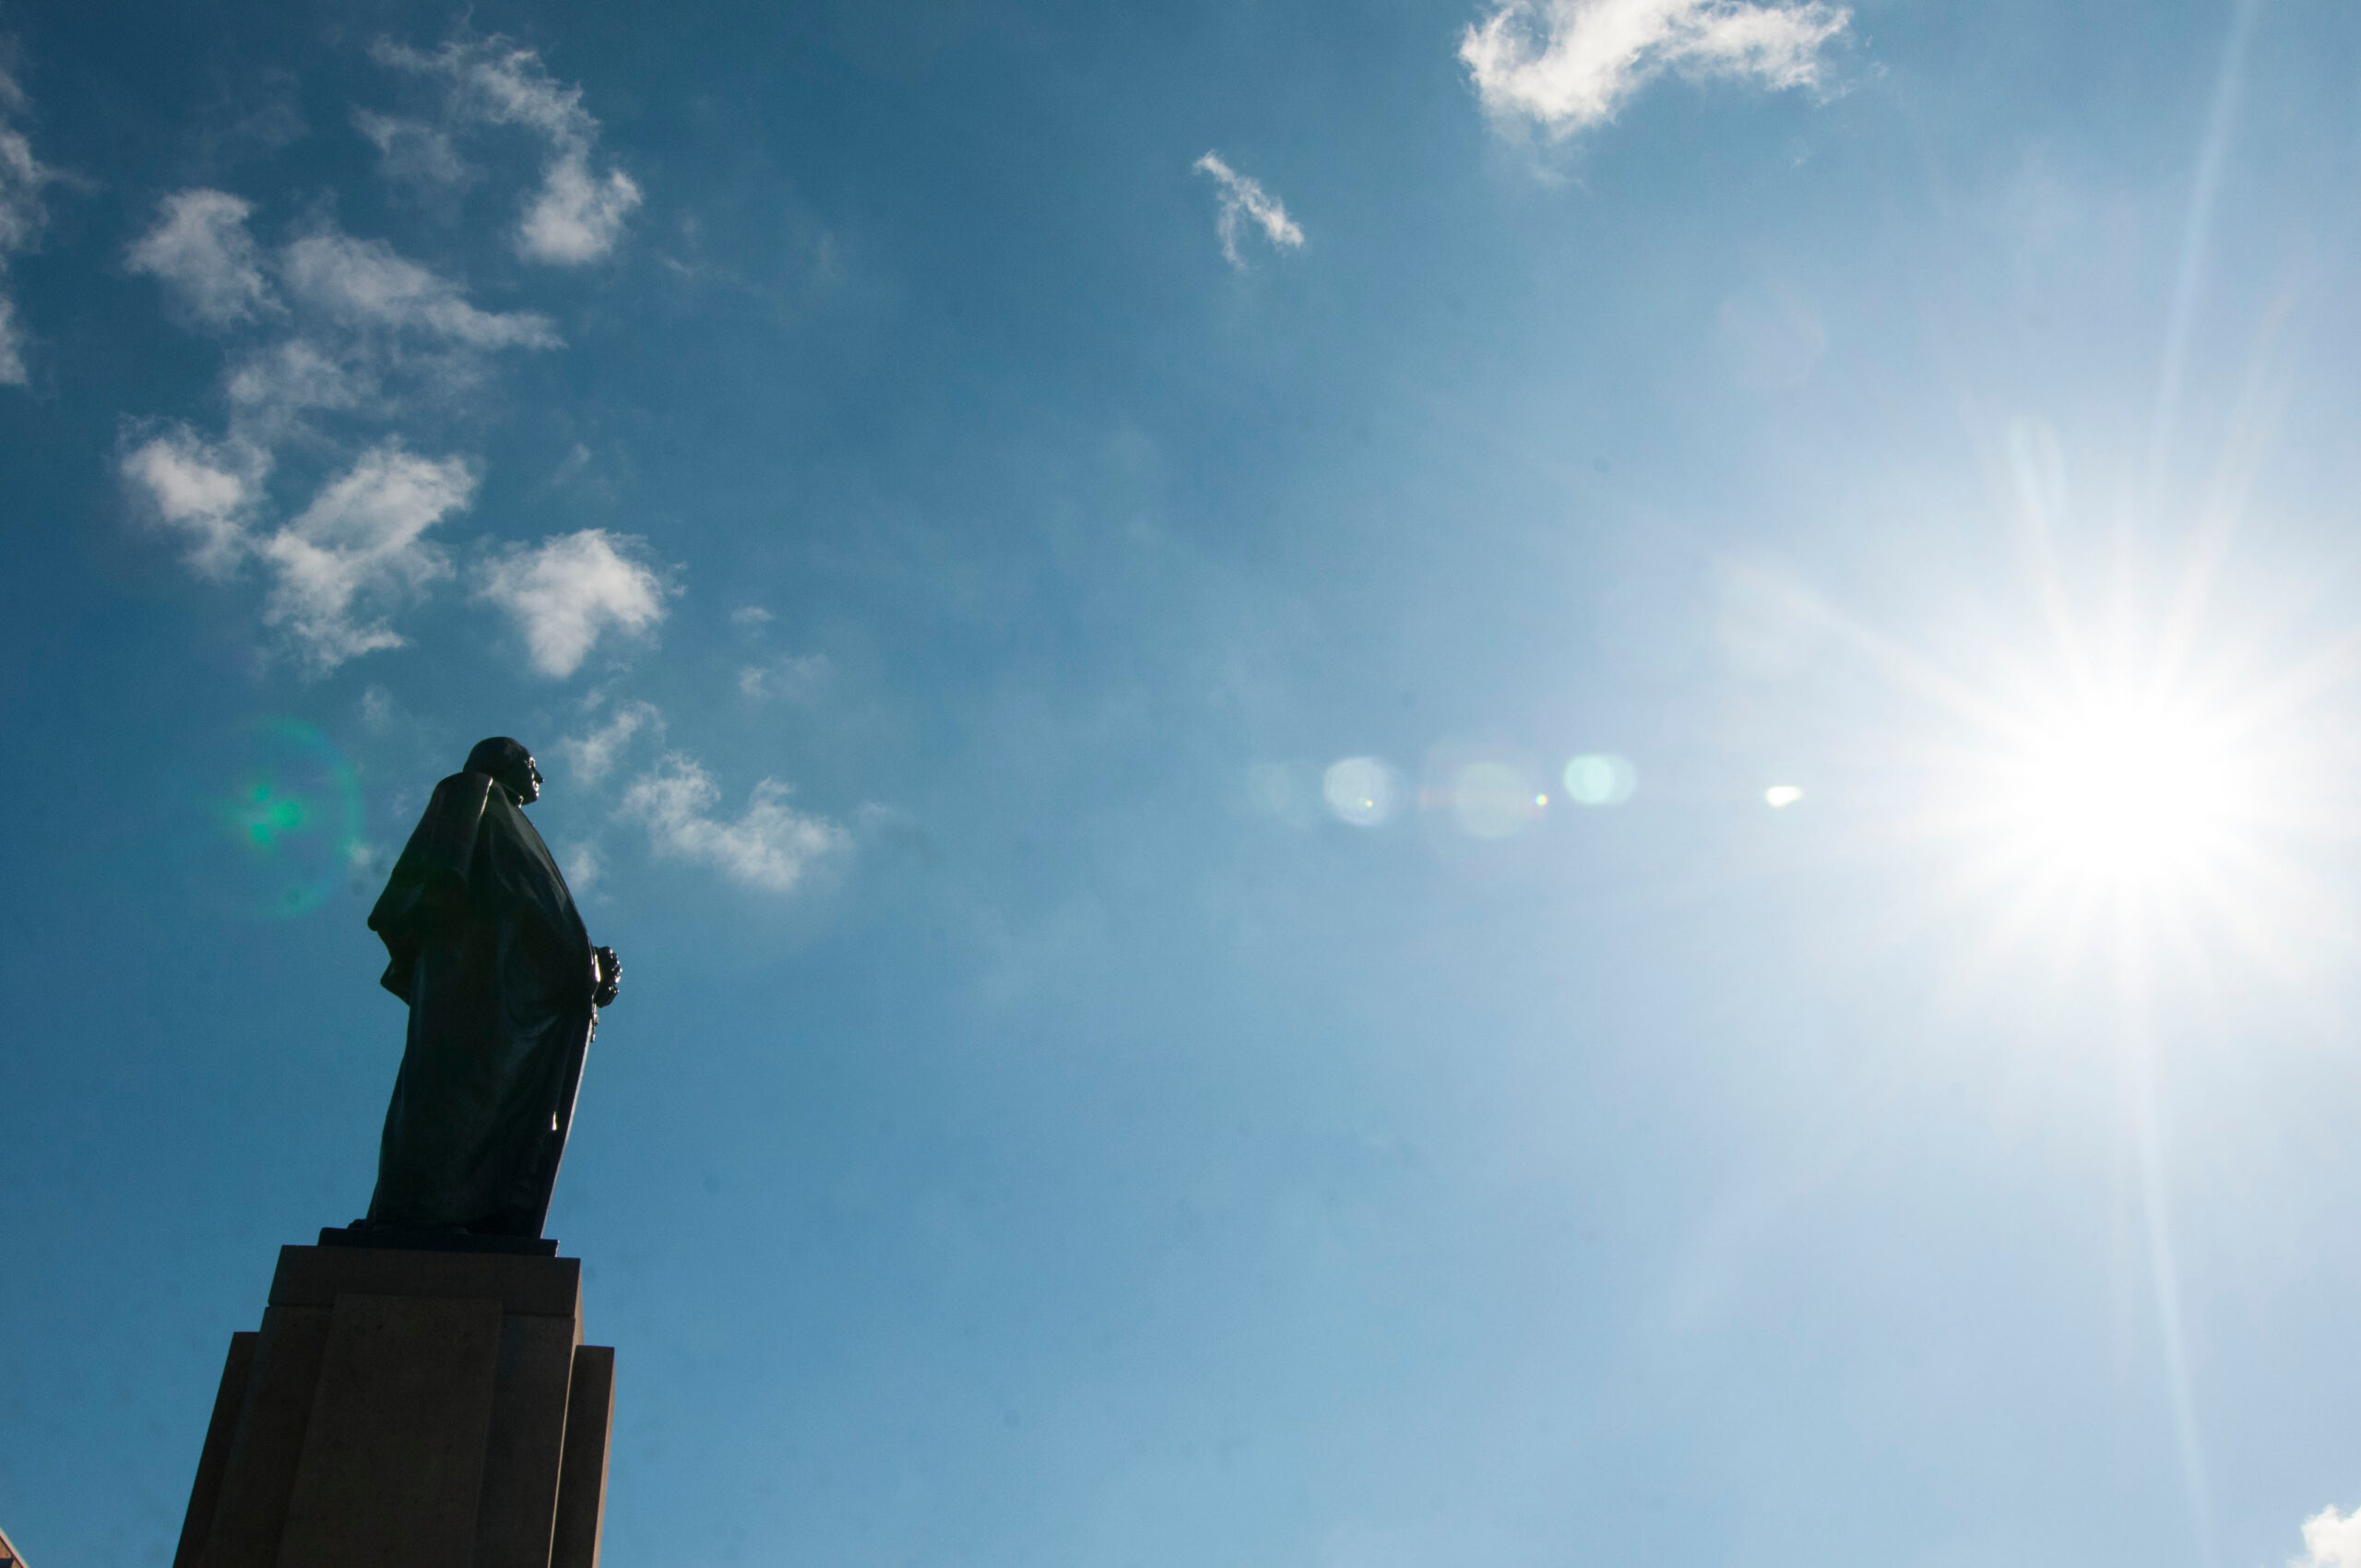 A photo of the University of Washington's George Washington statue © University of Washington